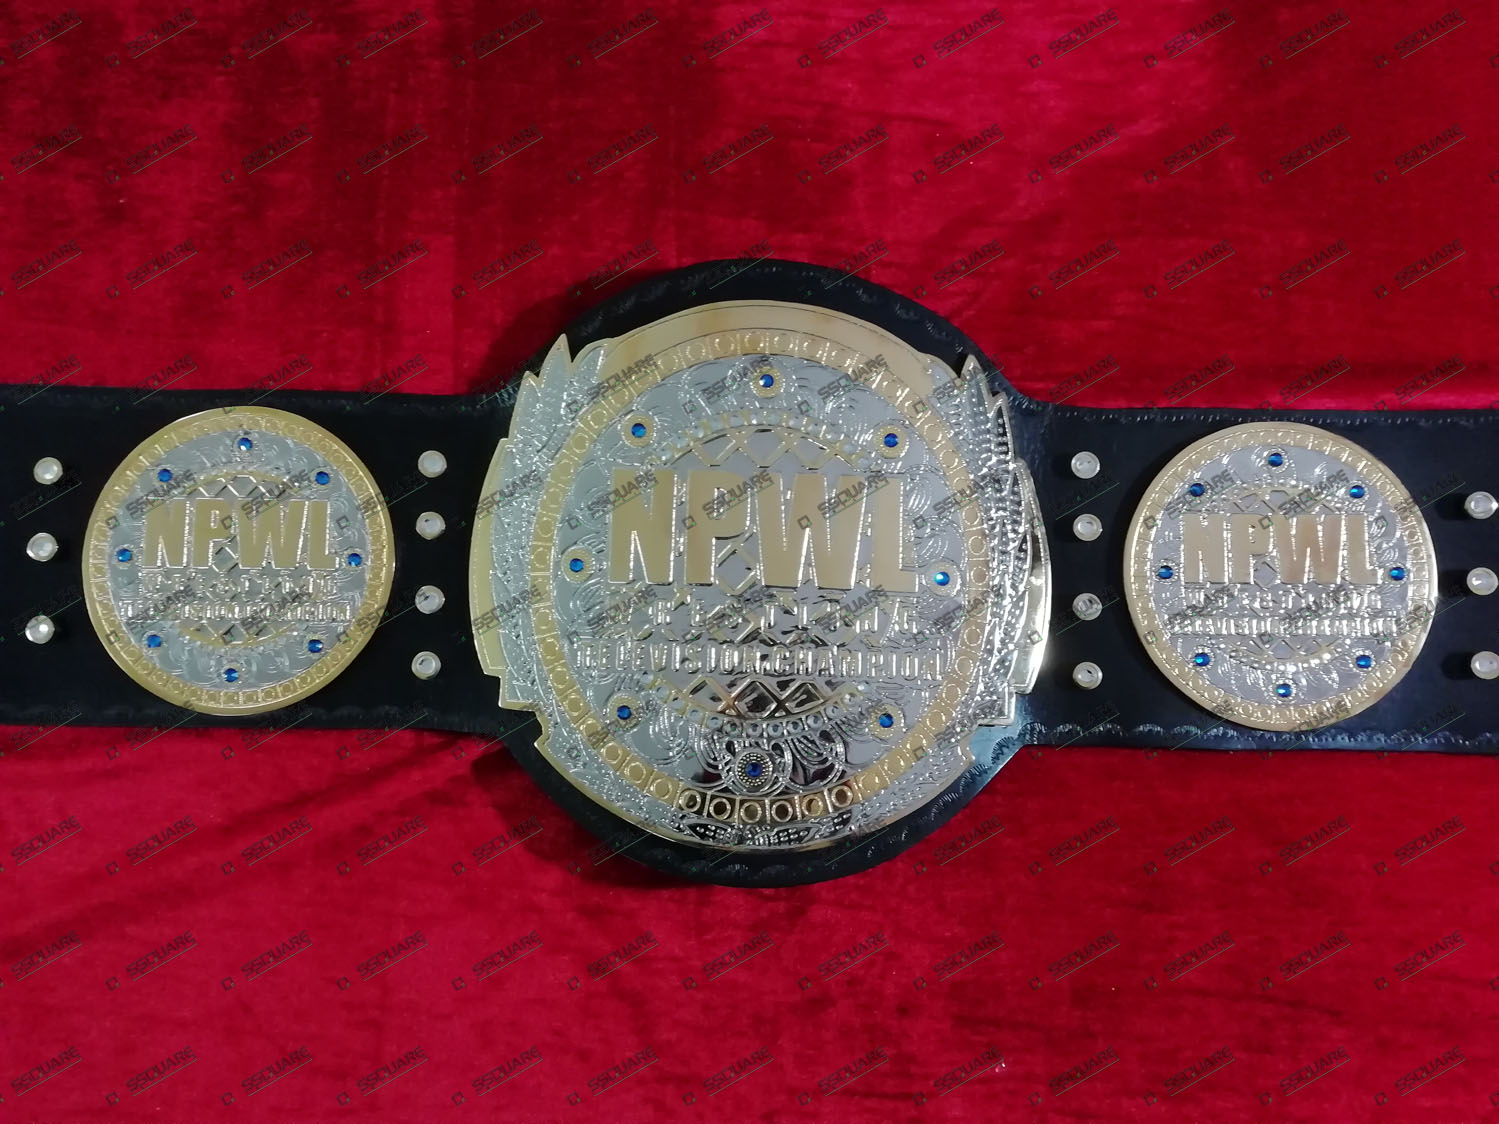 NPWL Television Wrestling Champion custom belt